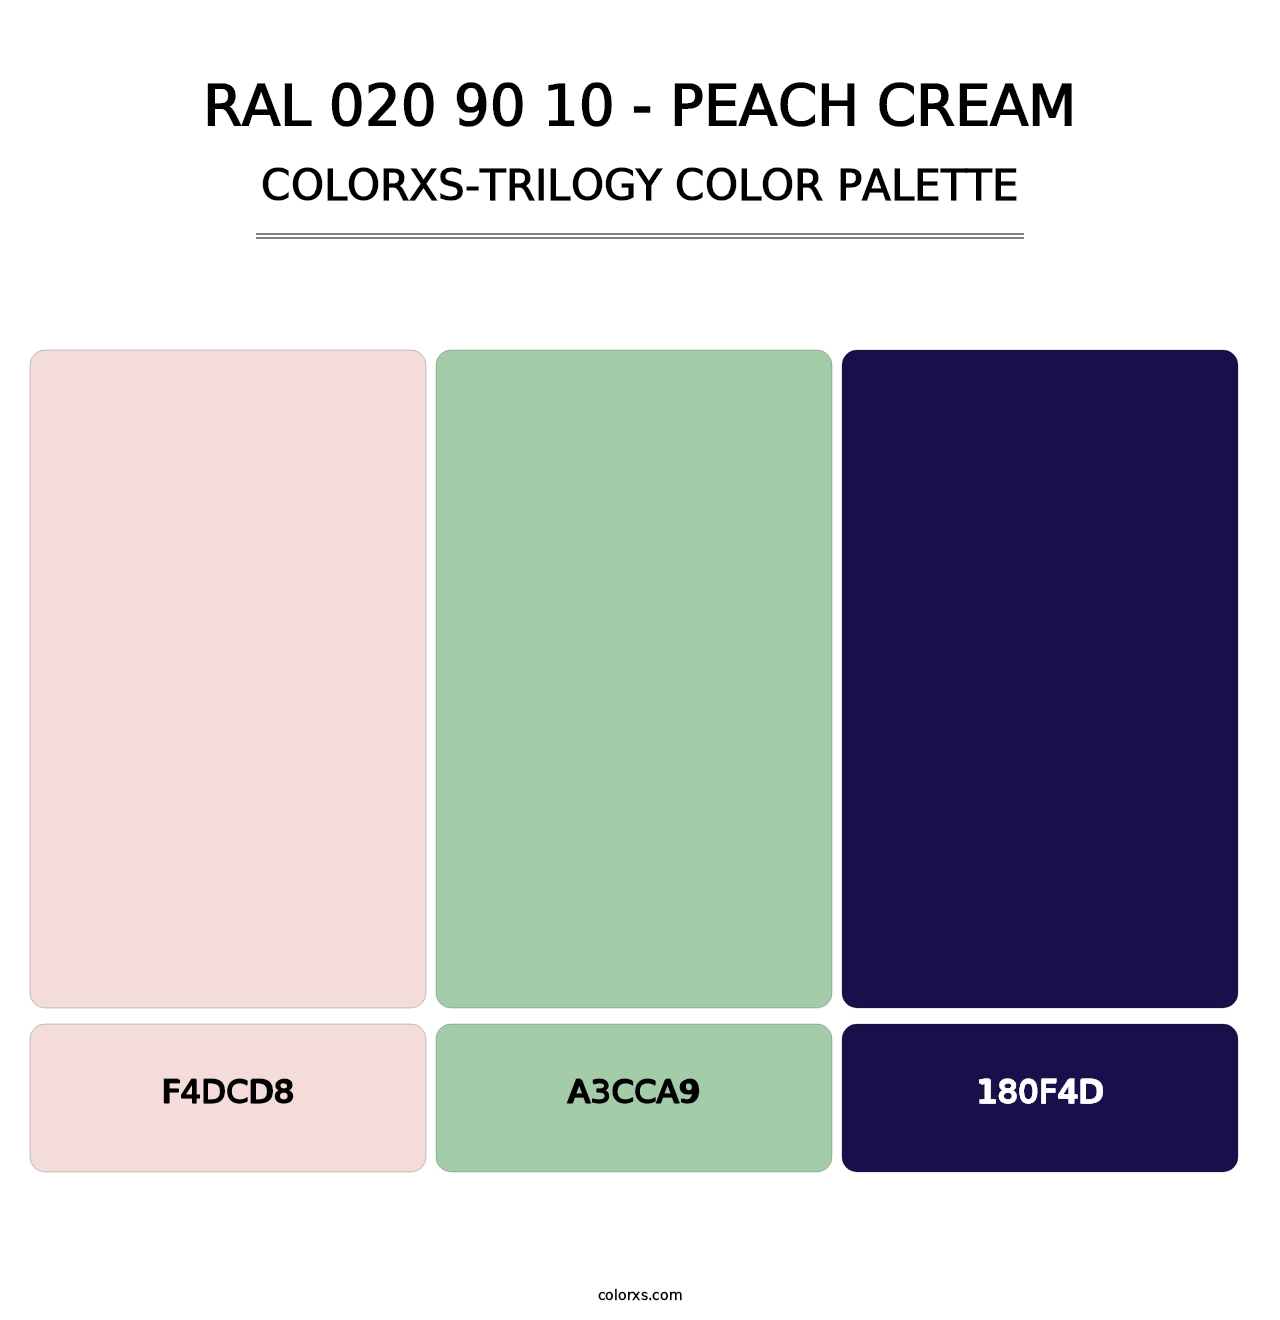 RAL 020 90 10 - Peach Cream - Colorxs Trilogy Palette